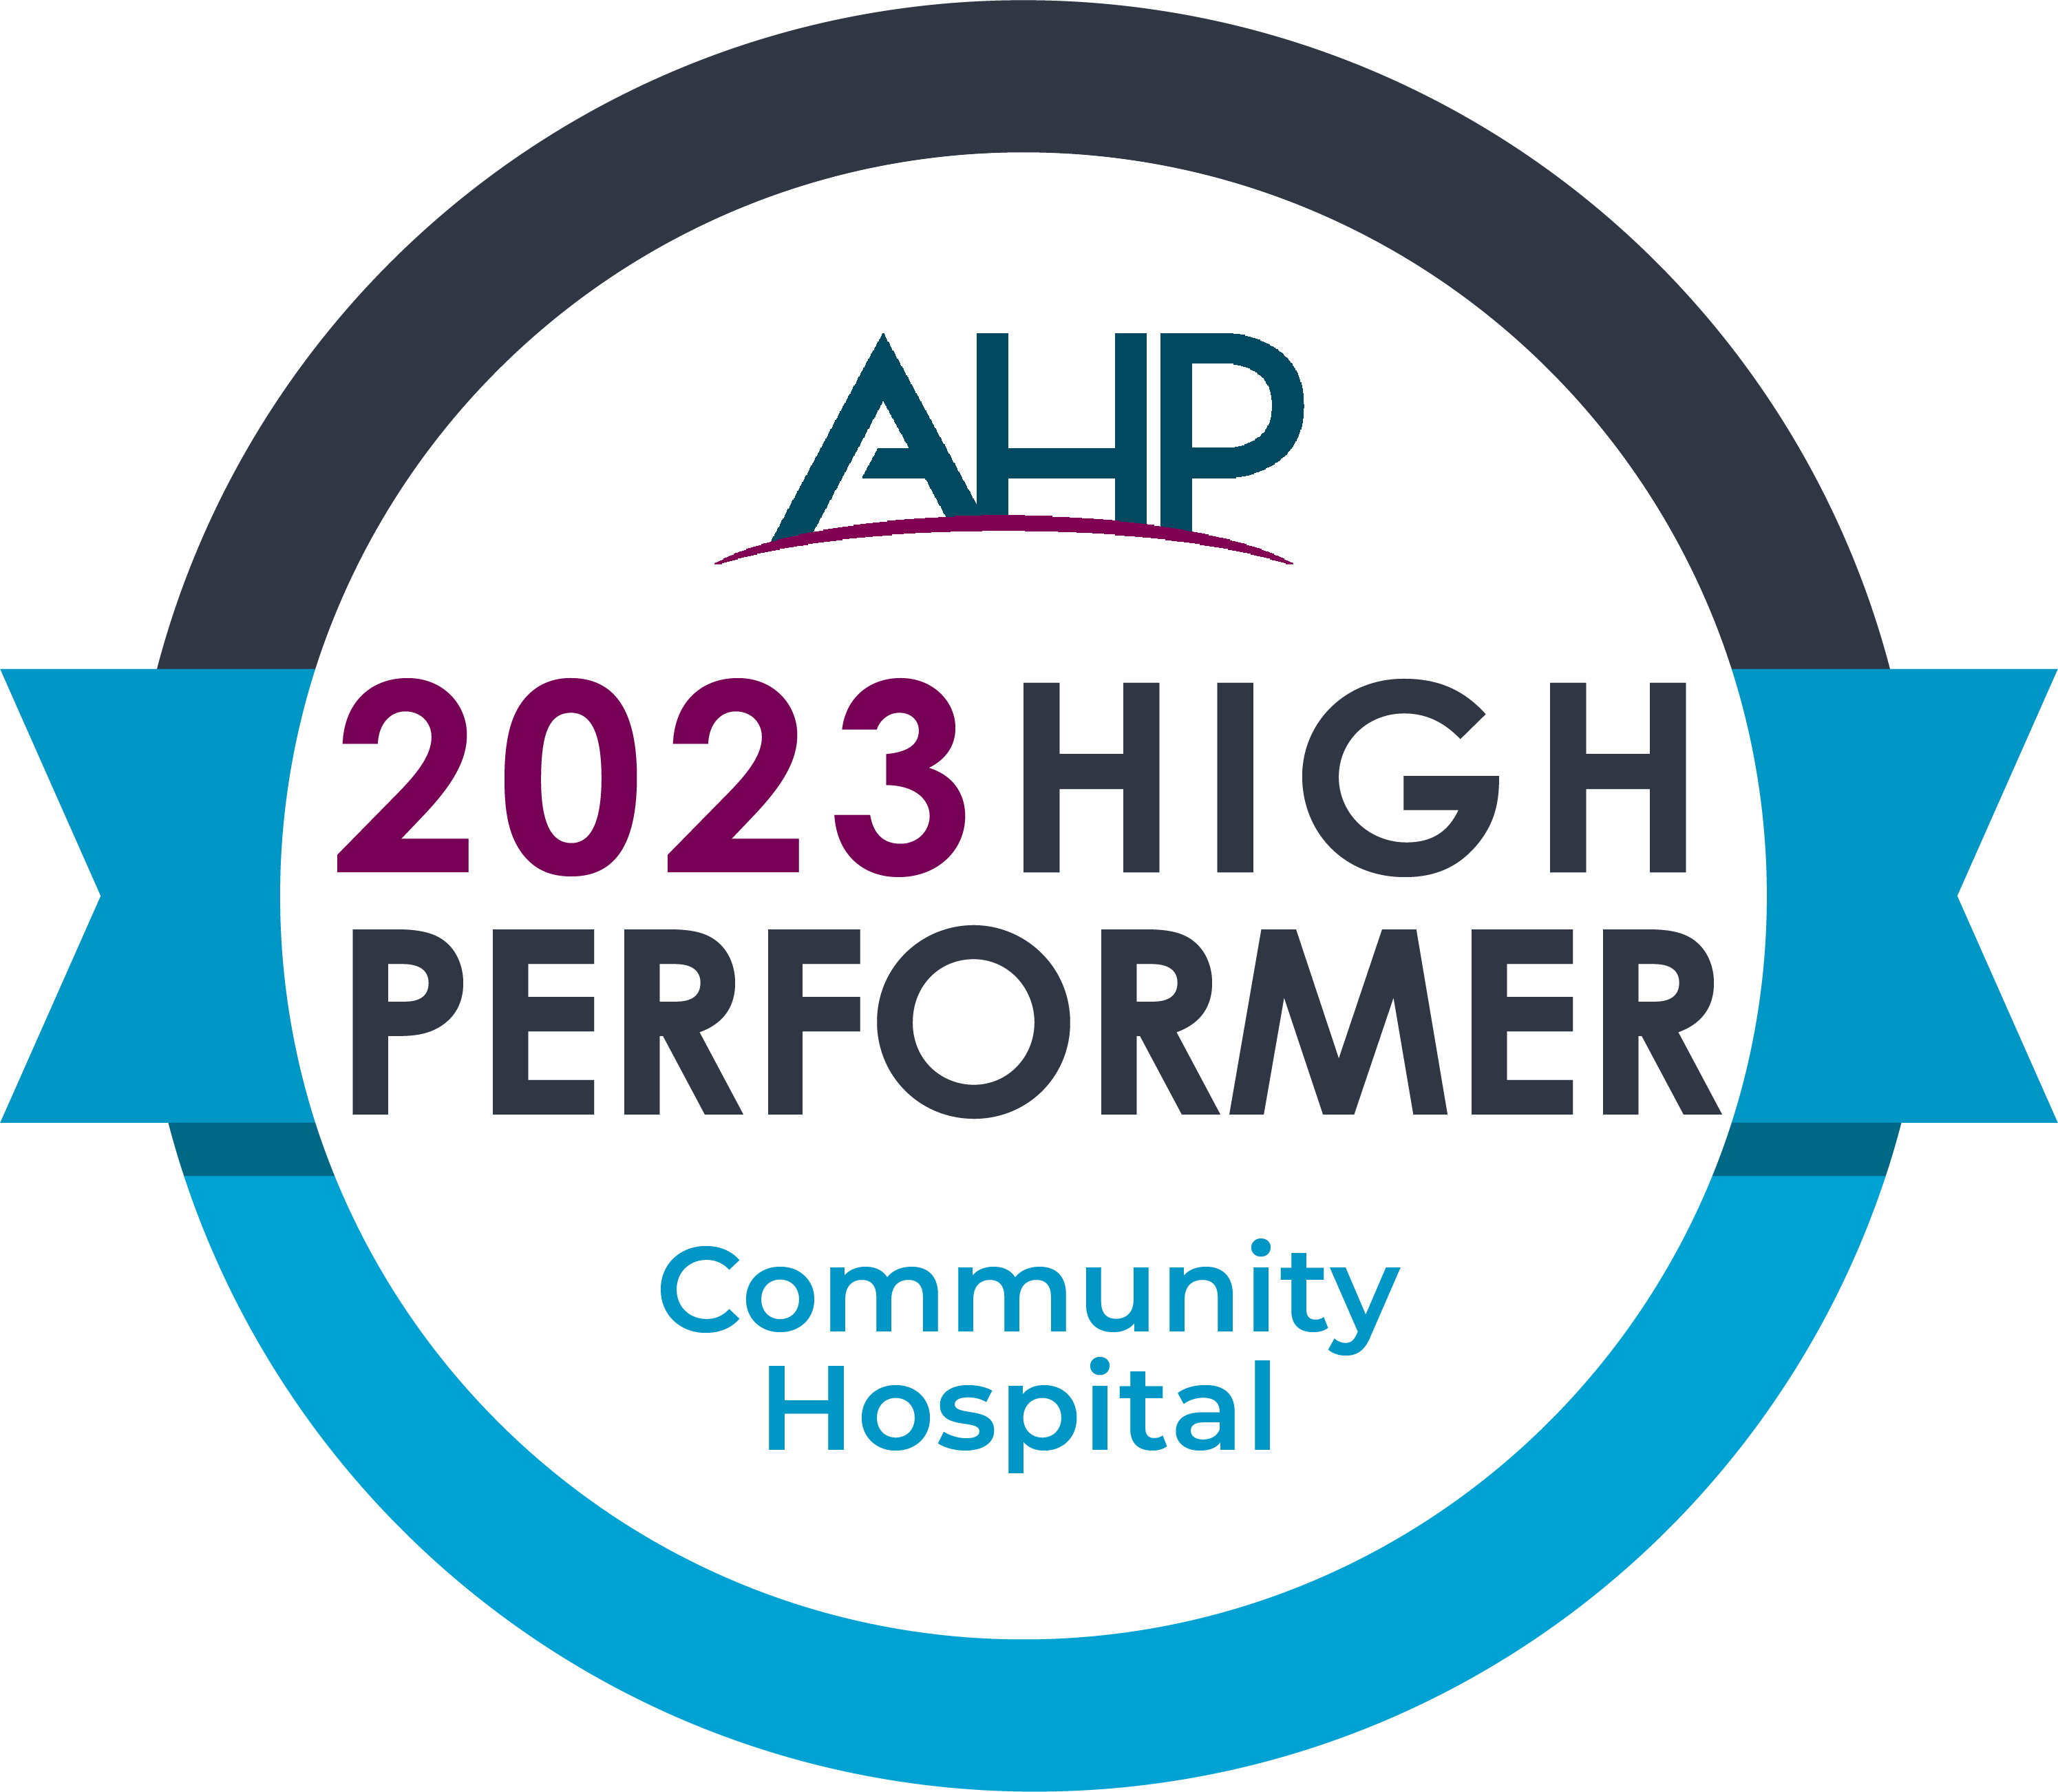 AHP 2023 high performer communinty hospital